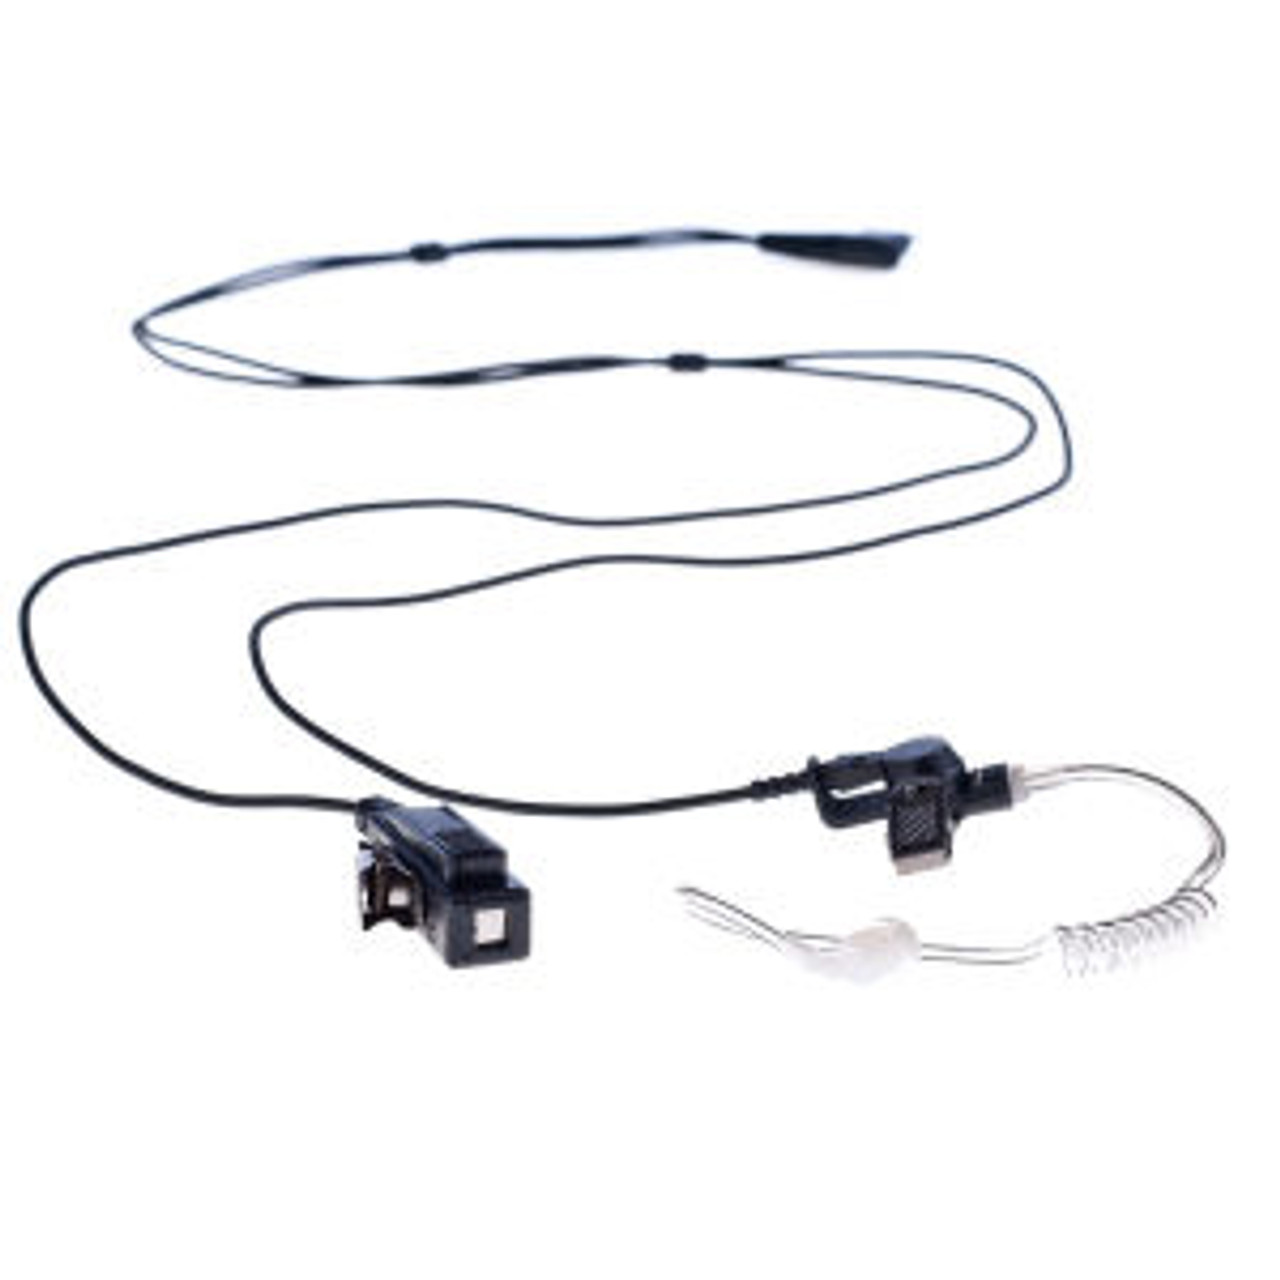 ICOM IC-F21 2-Wire Surveillance Kit